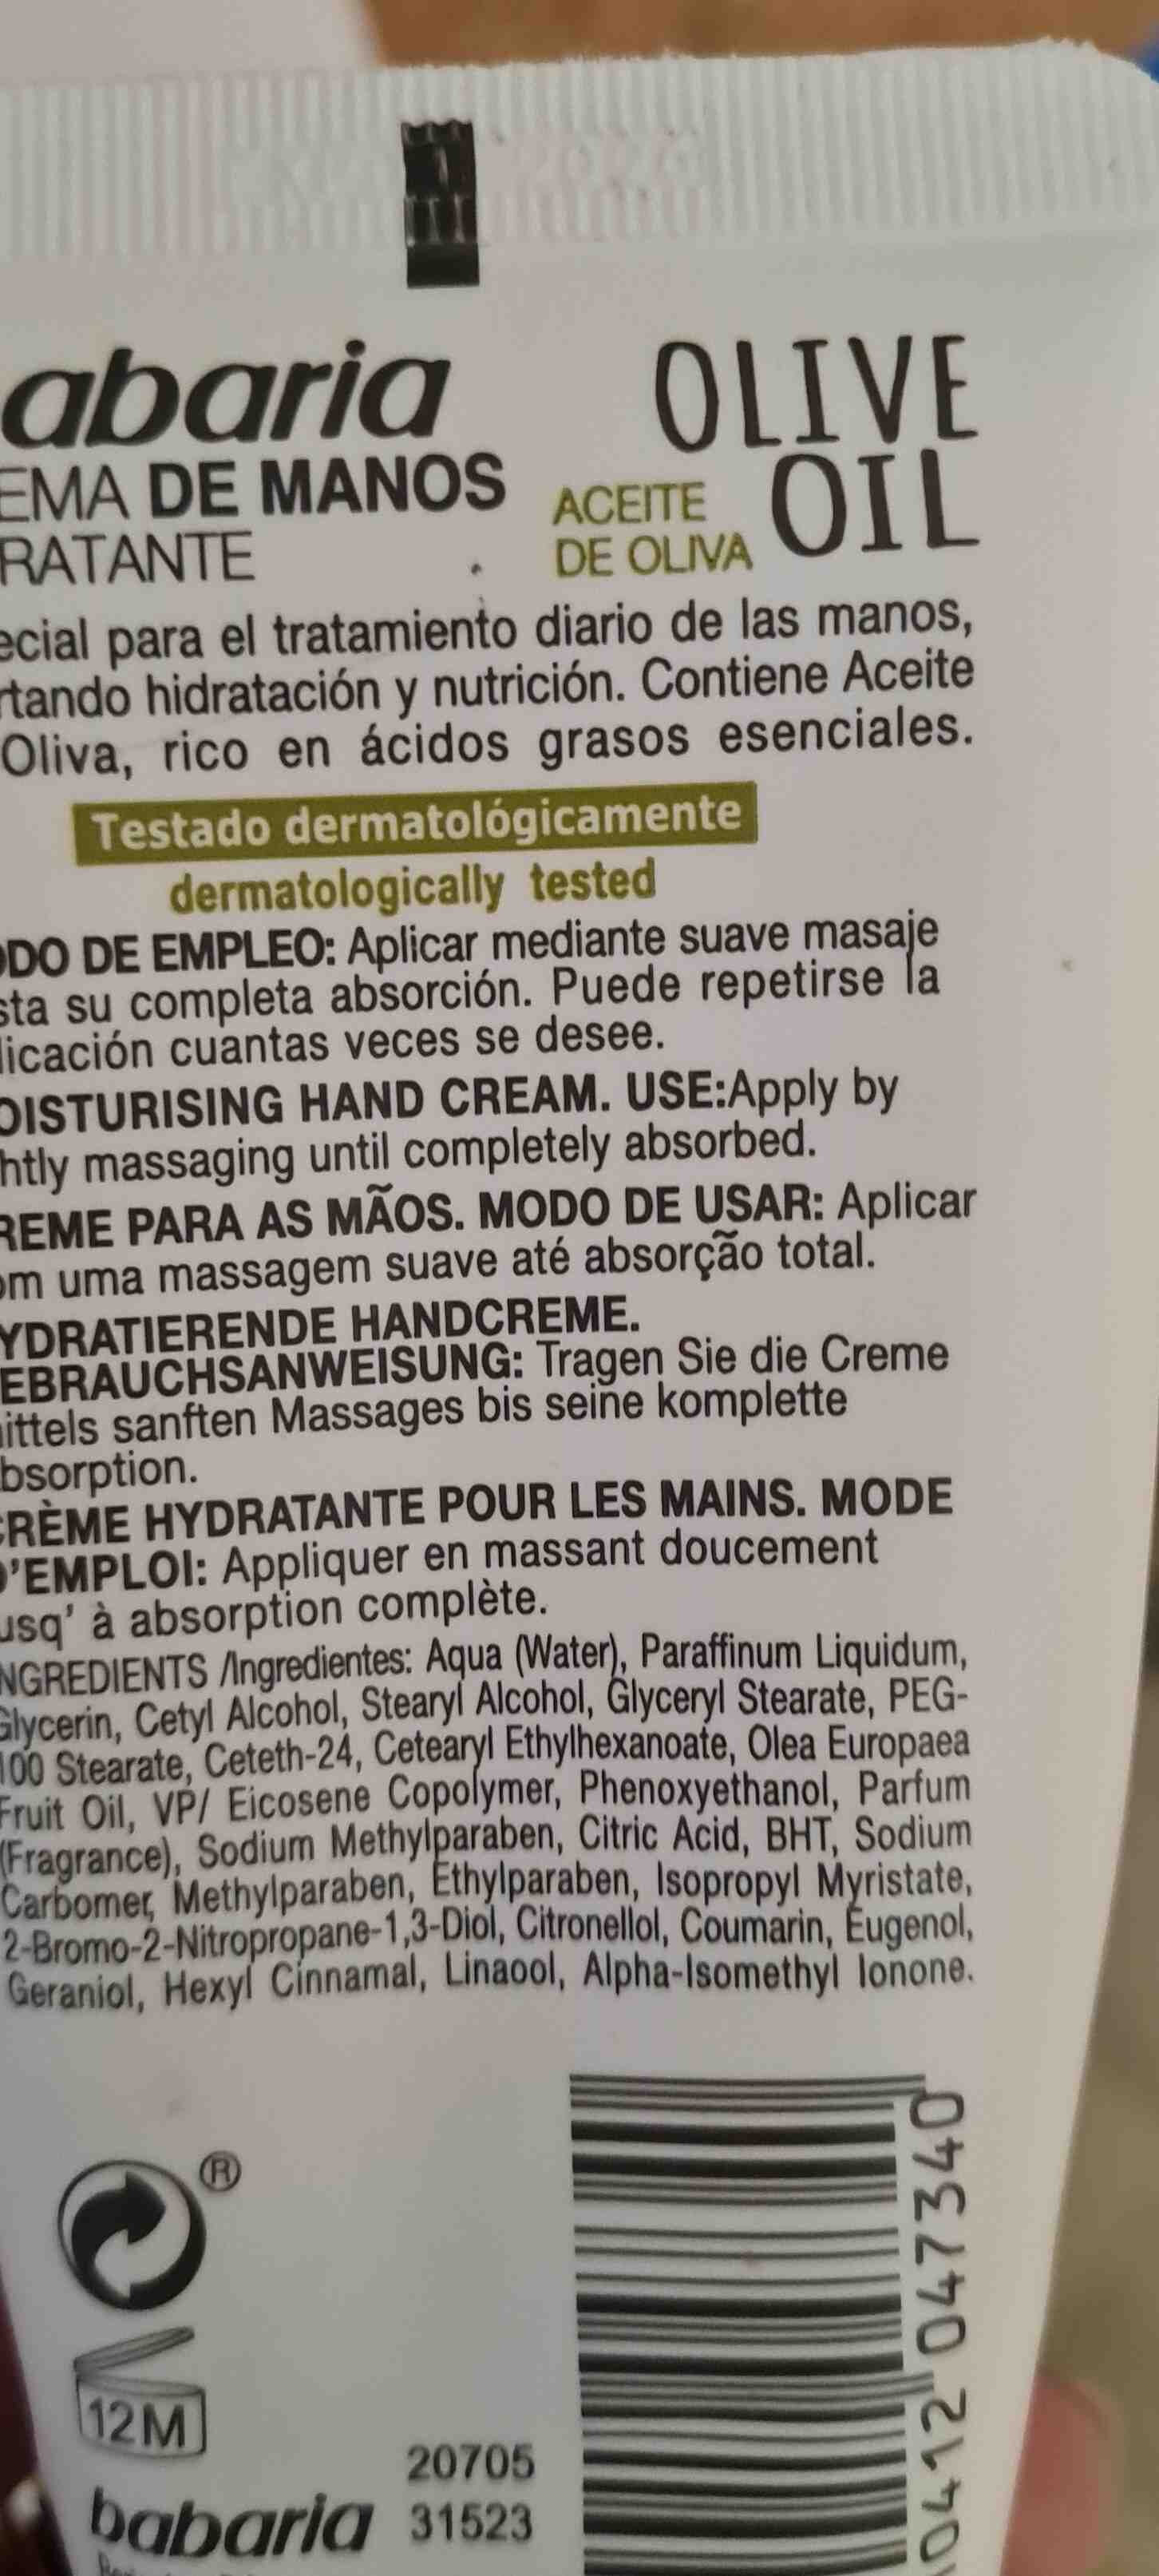 Crema manos olive oil - Ingredients - en